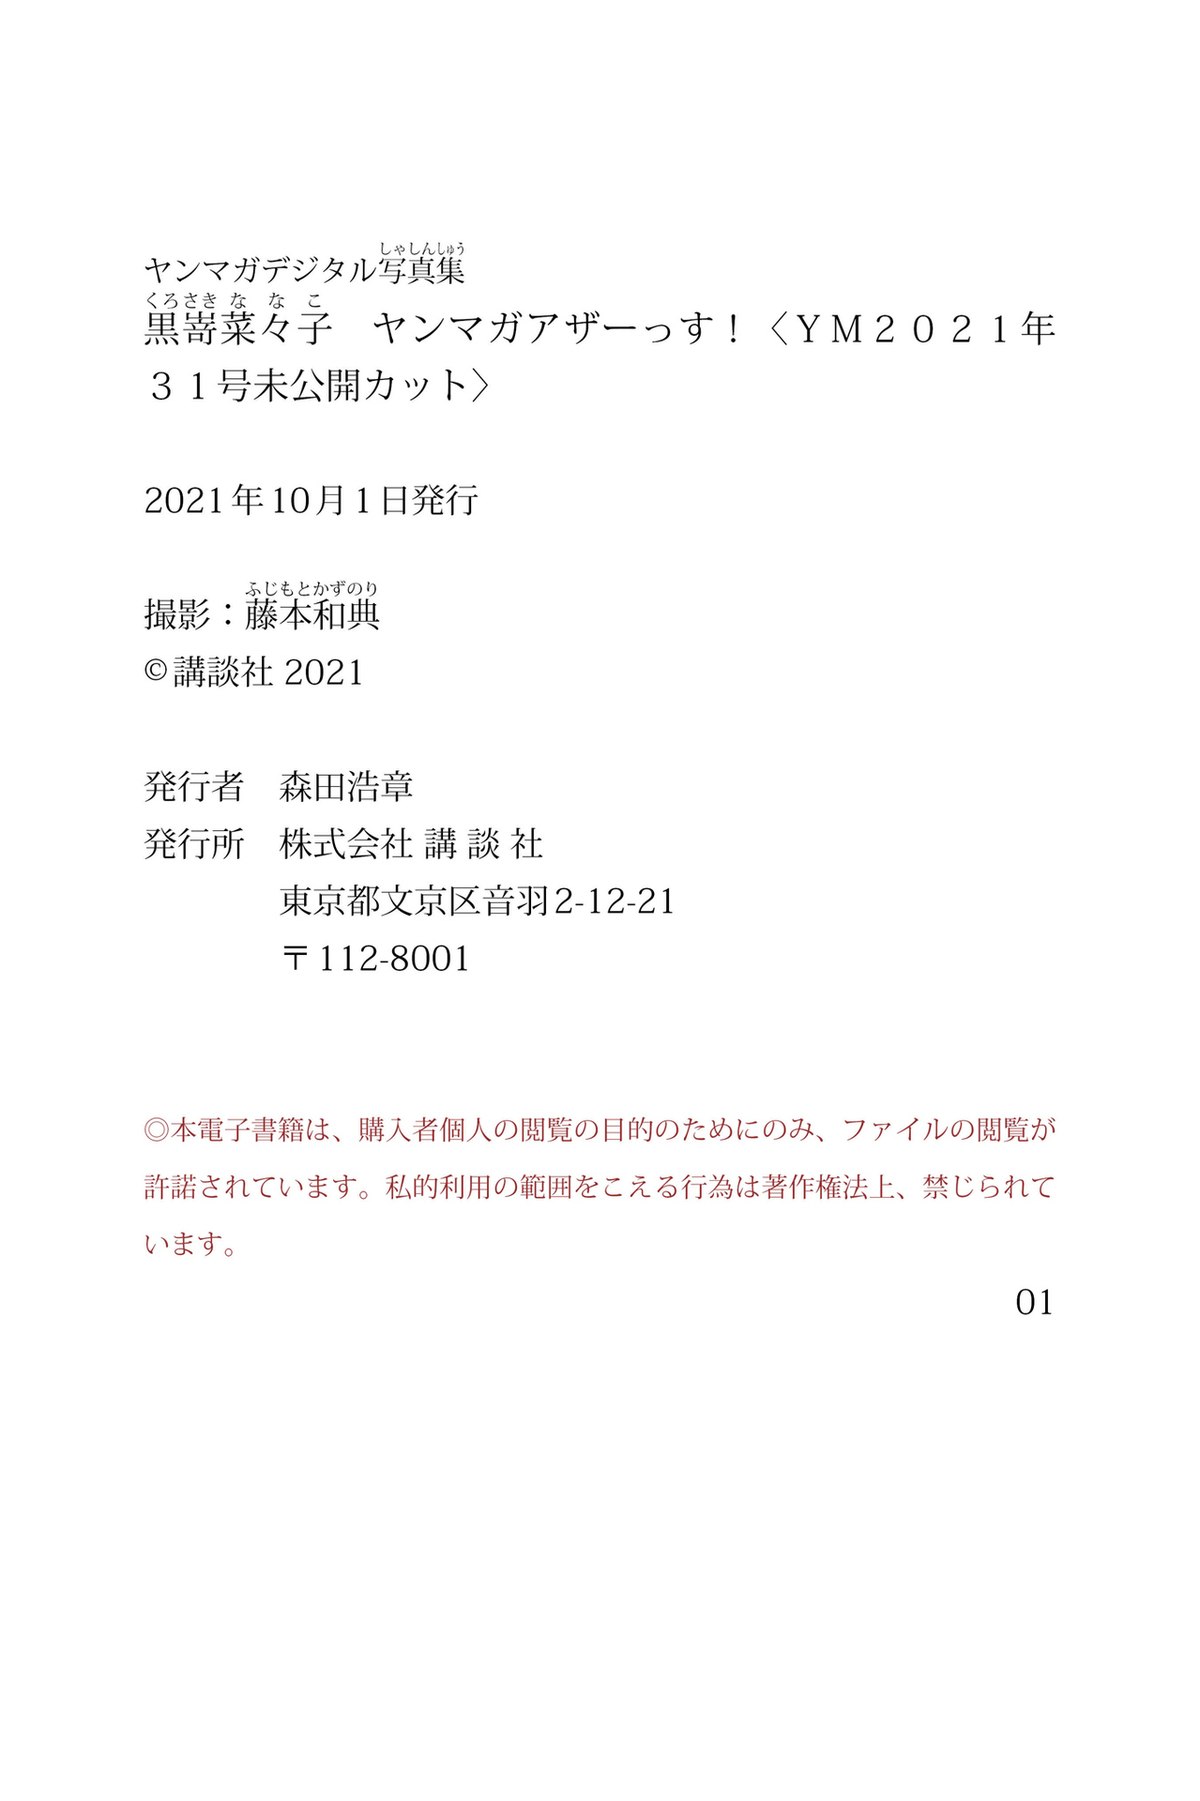 Photobook Kurosaki Nanako 黒嵜菜々子 YM 2021 Issue 31 Unreleased Cut 0037 1864889590.jpg